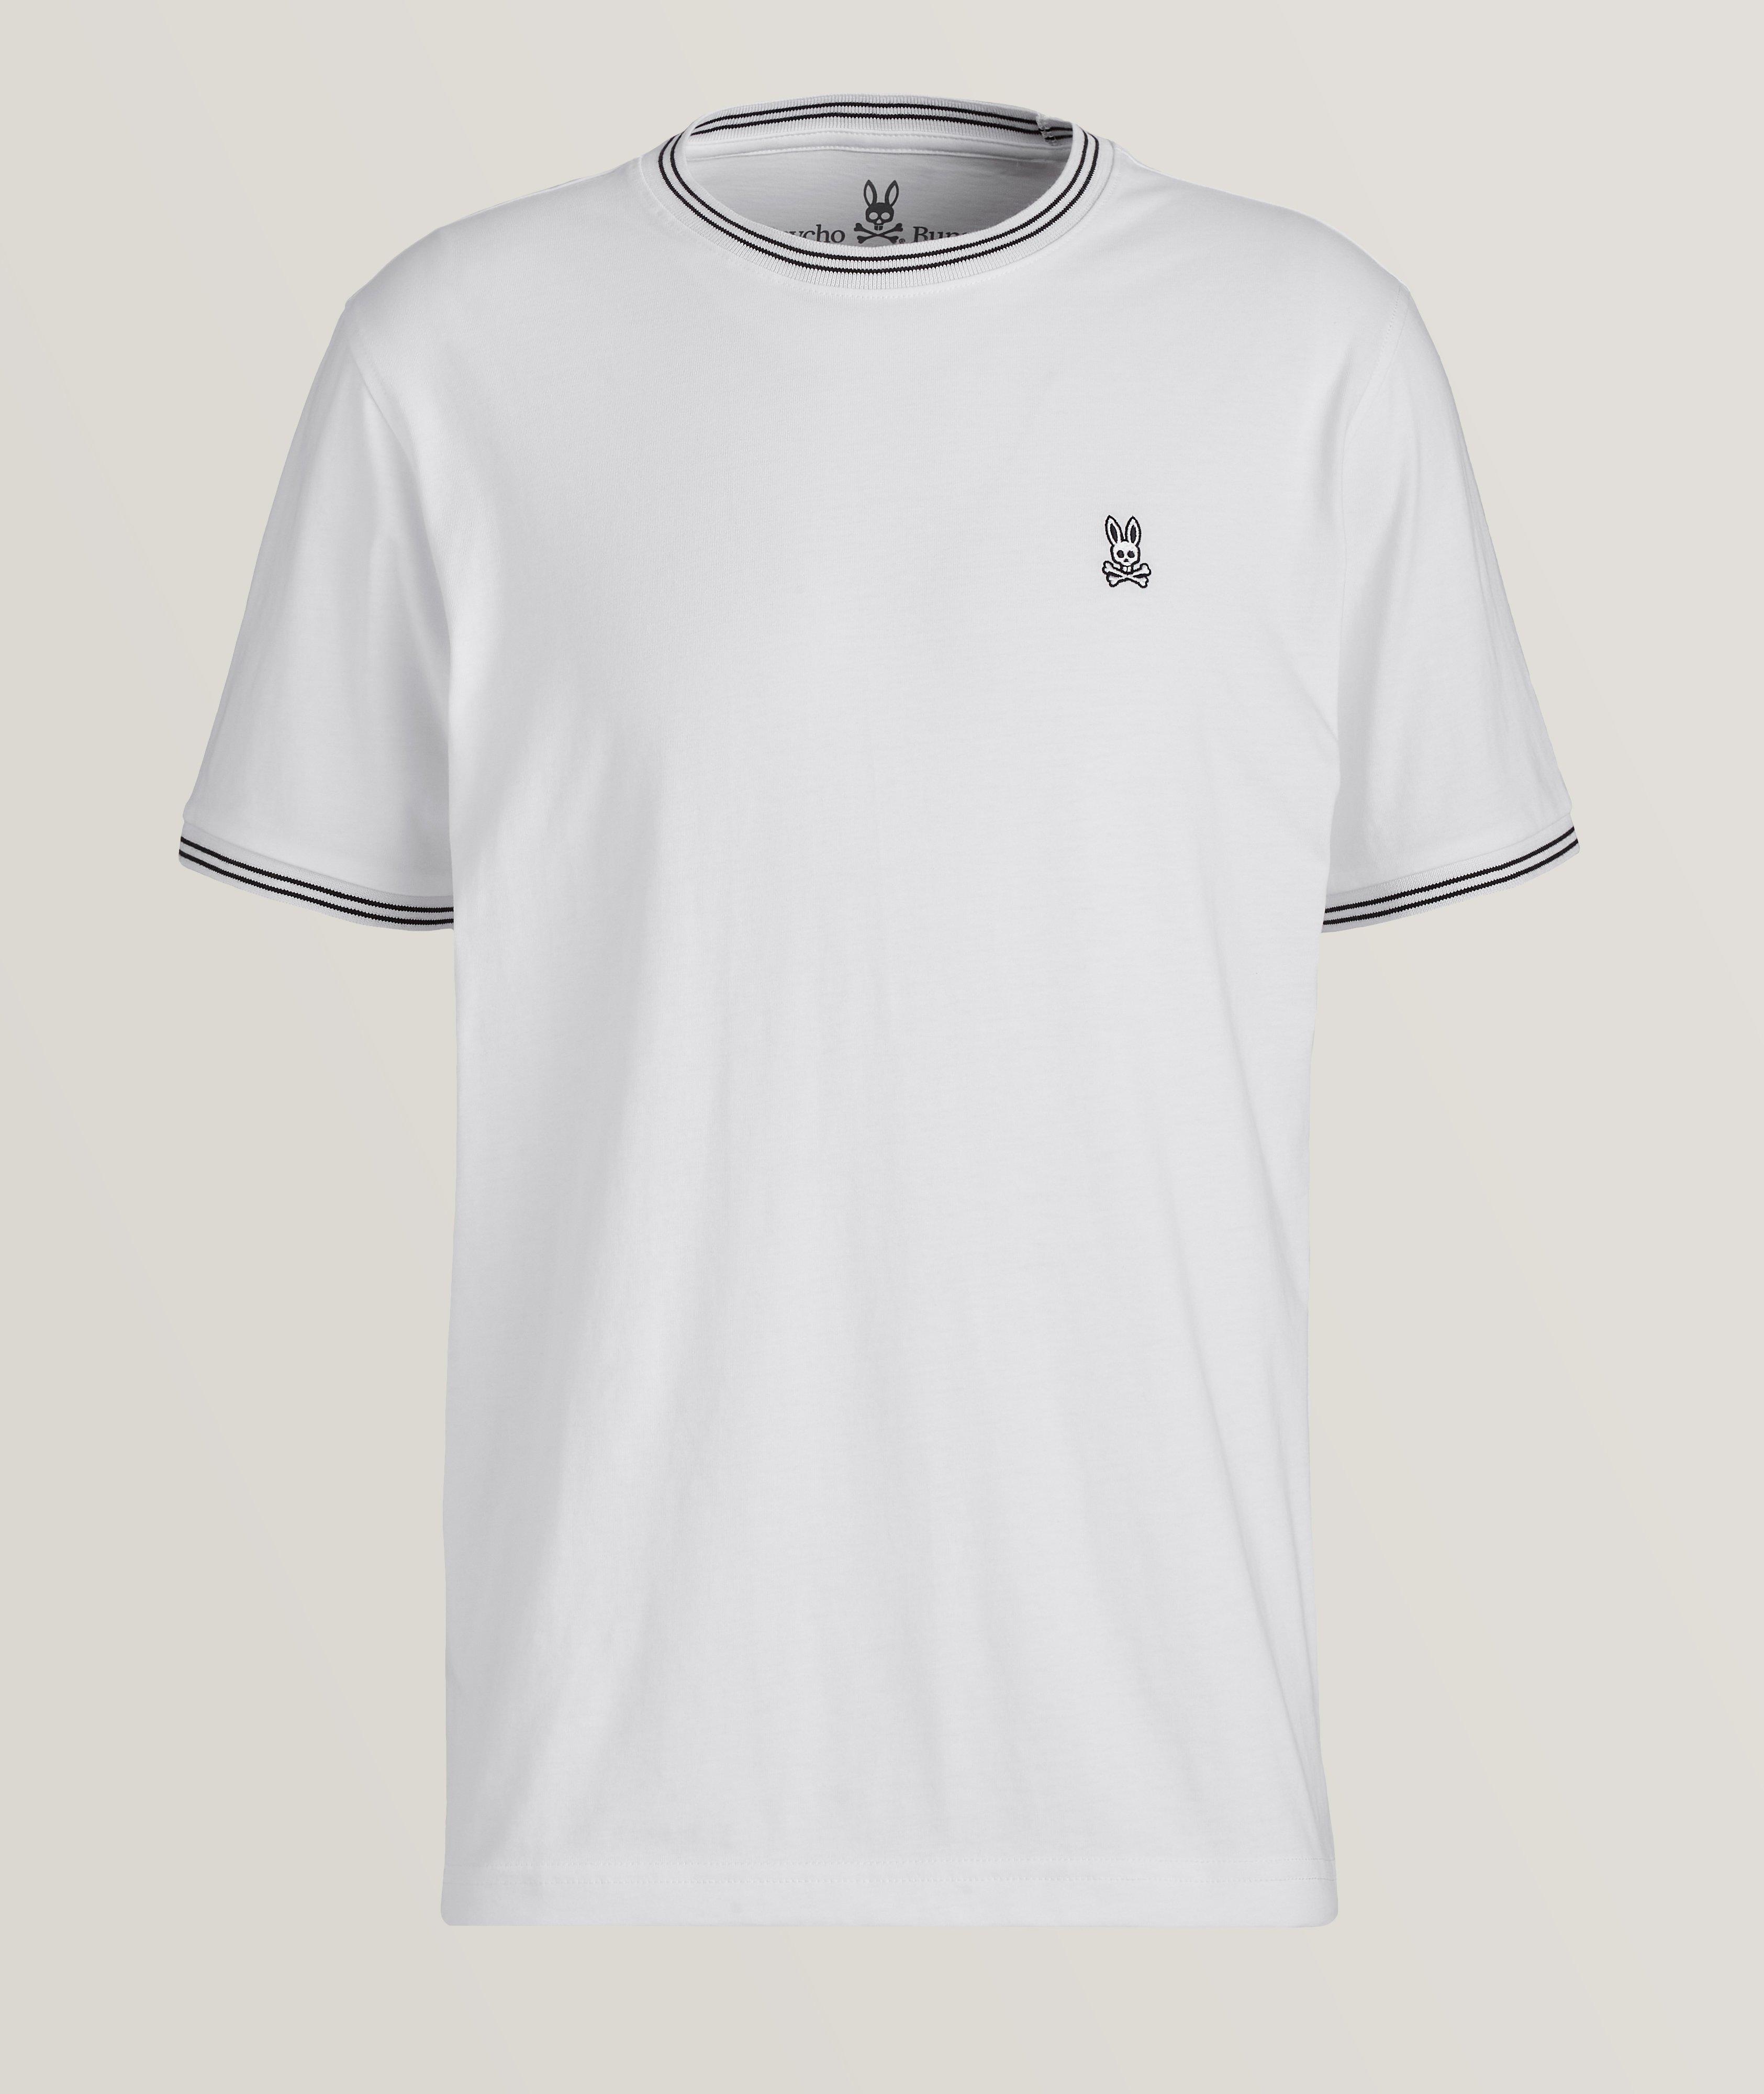 Knit Trim Jersey T-Shirt image 0